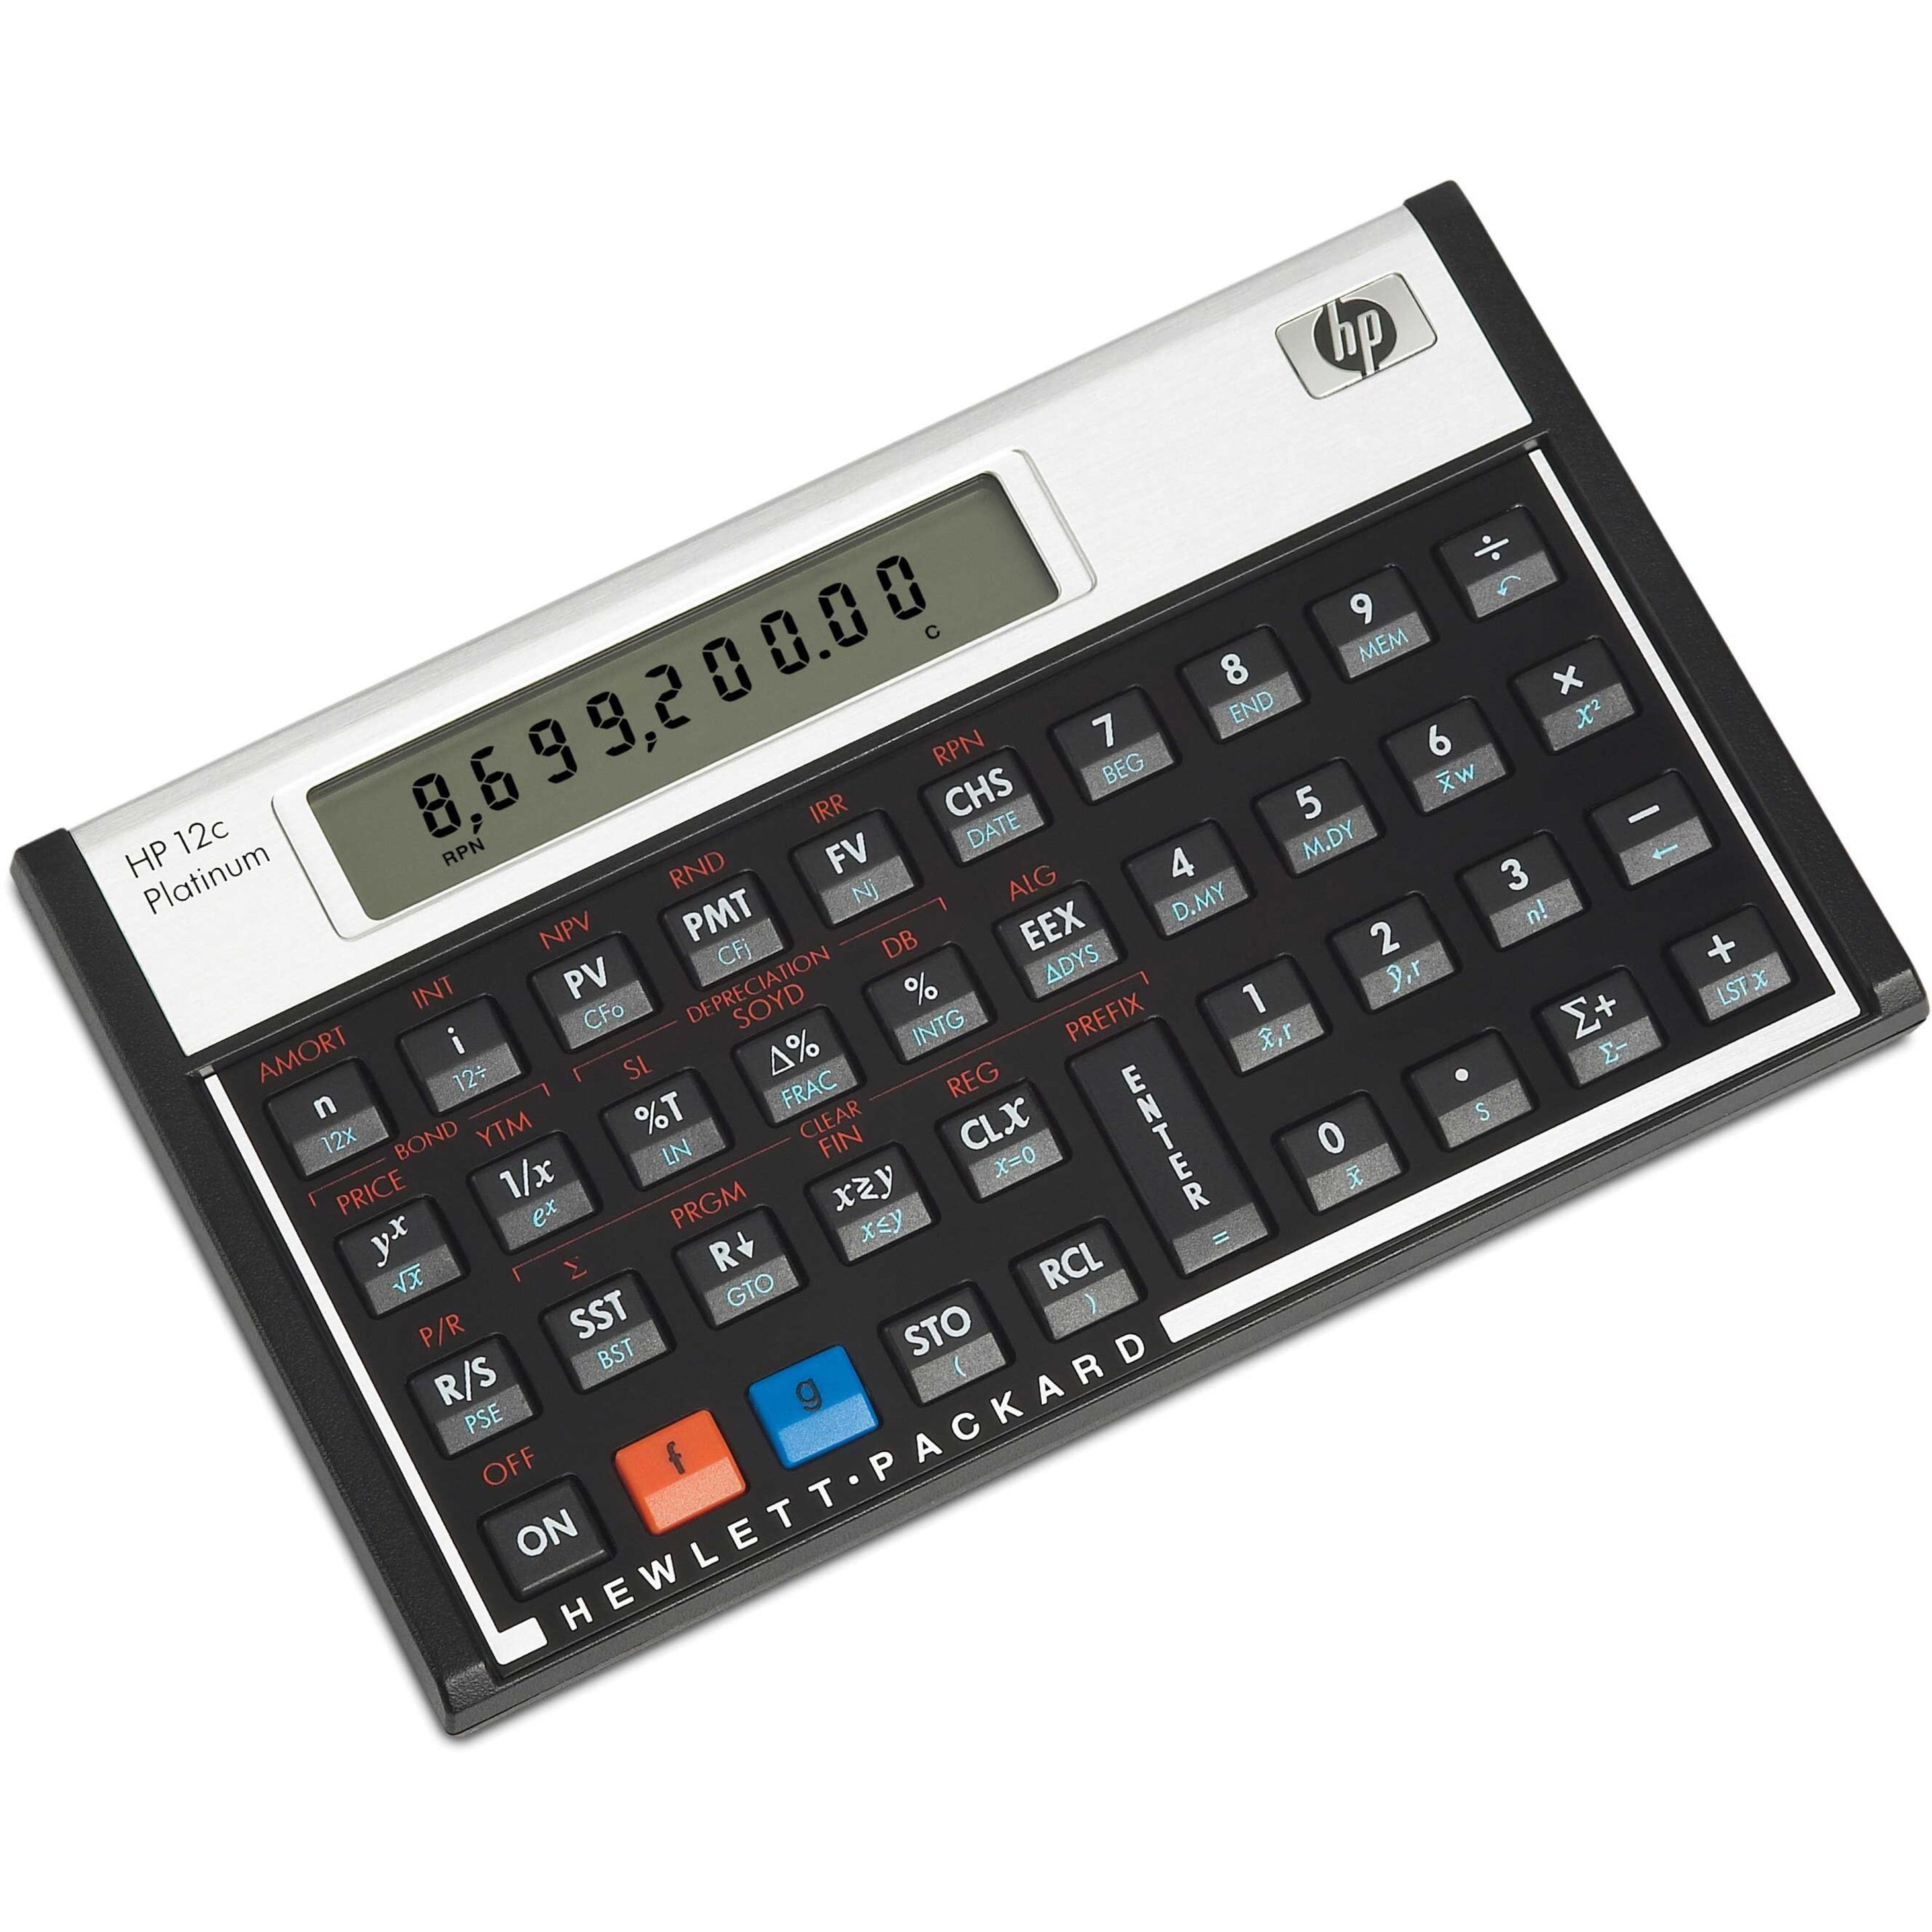 2 Vintage Hewlett Packard HP 12c Financial Calculator for sale online 